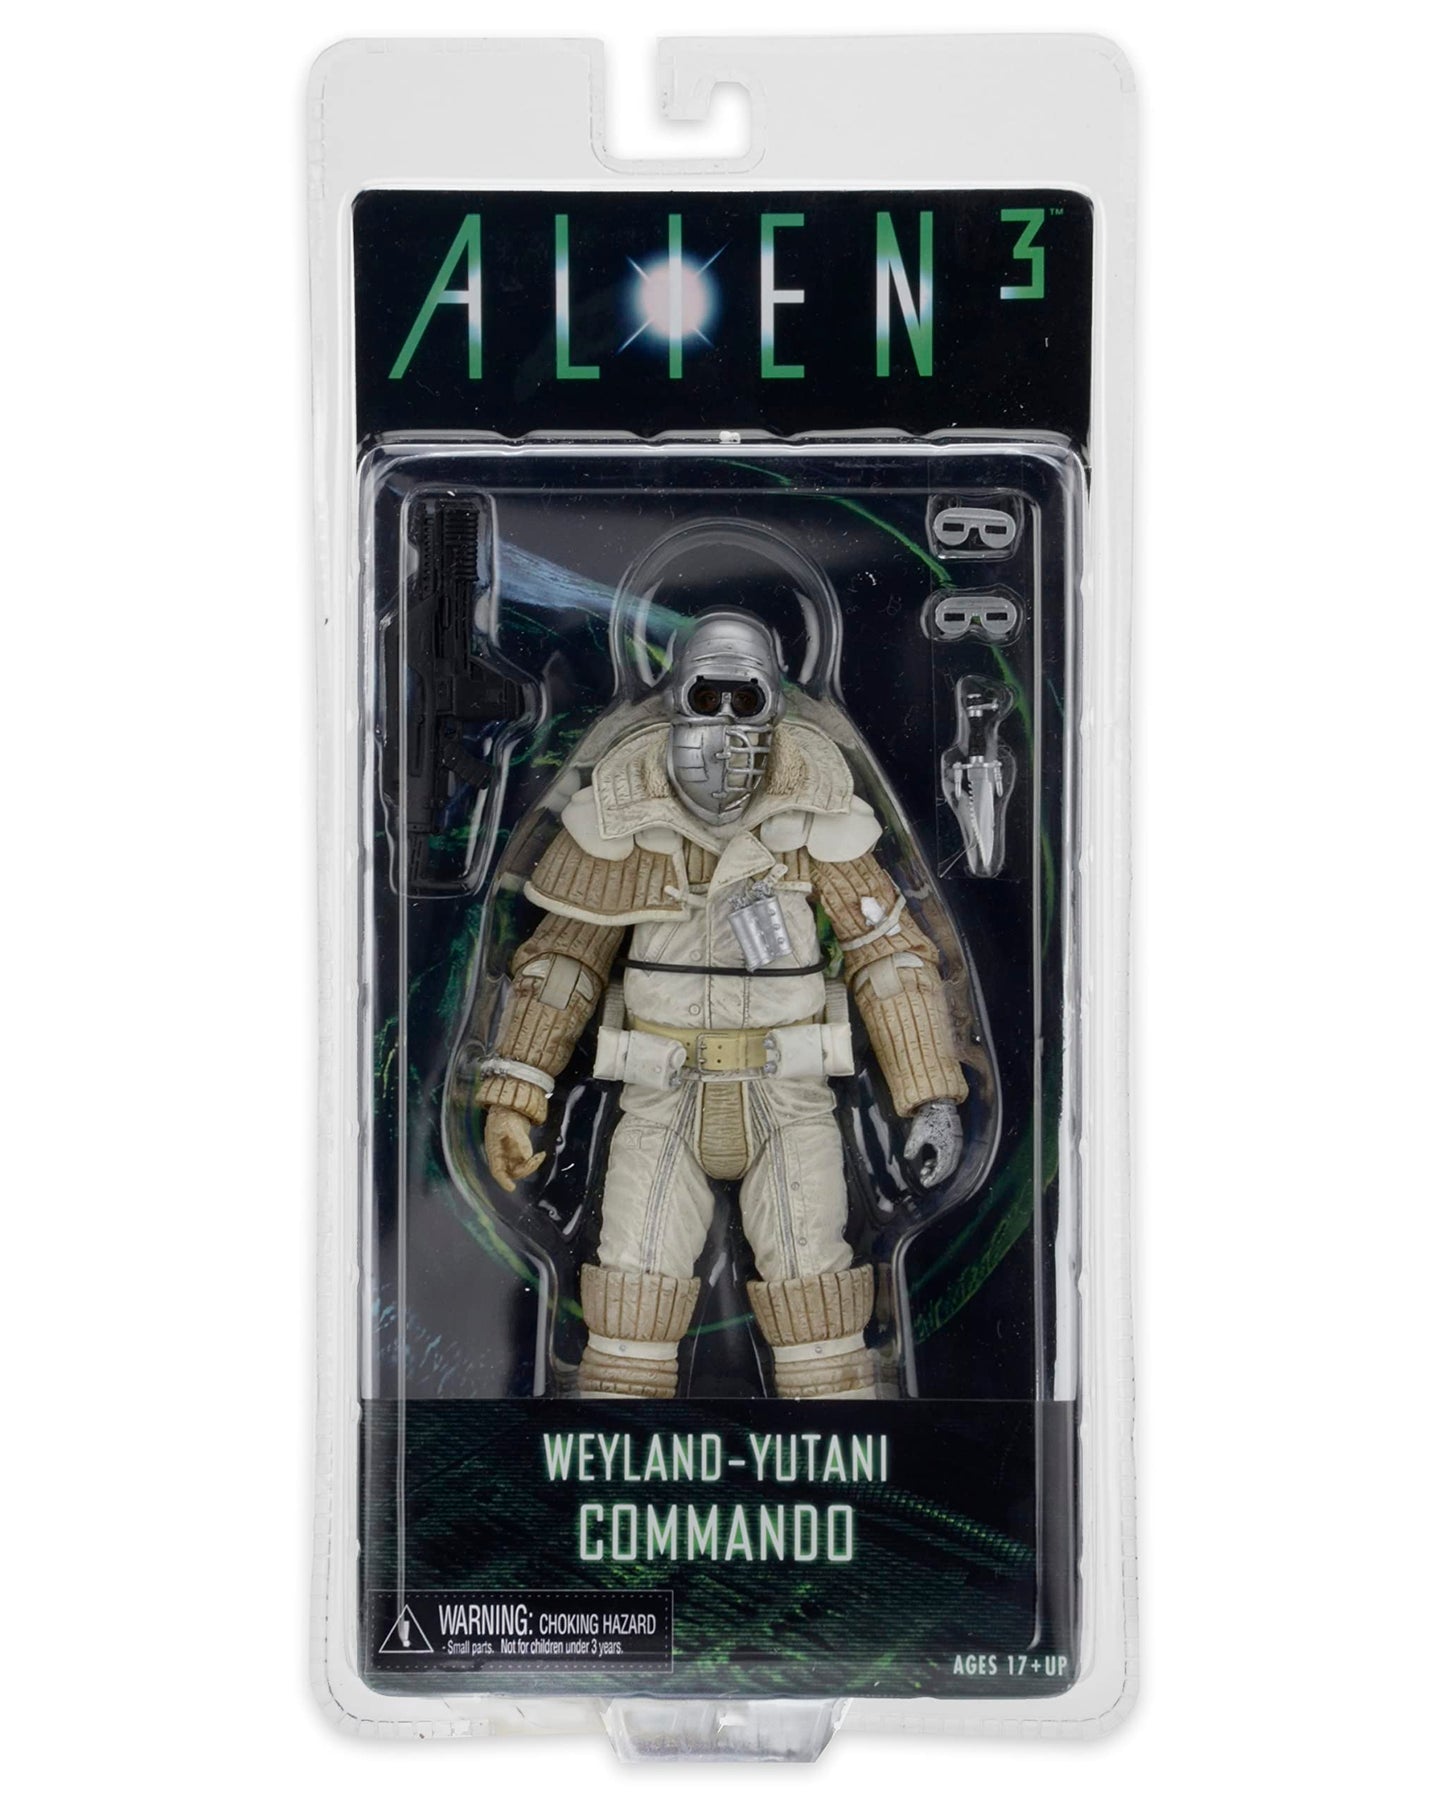 NECA Alien 3 Weyland-Yutani Commando